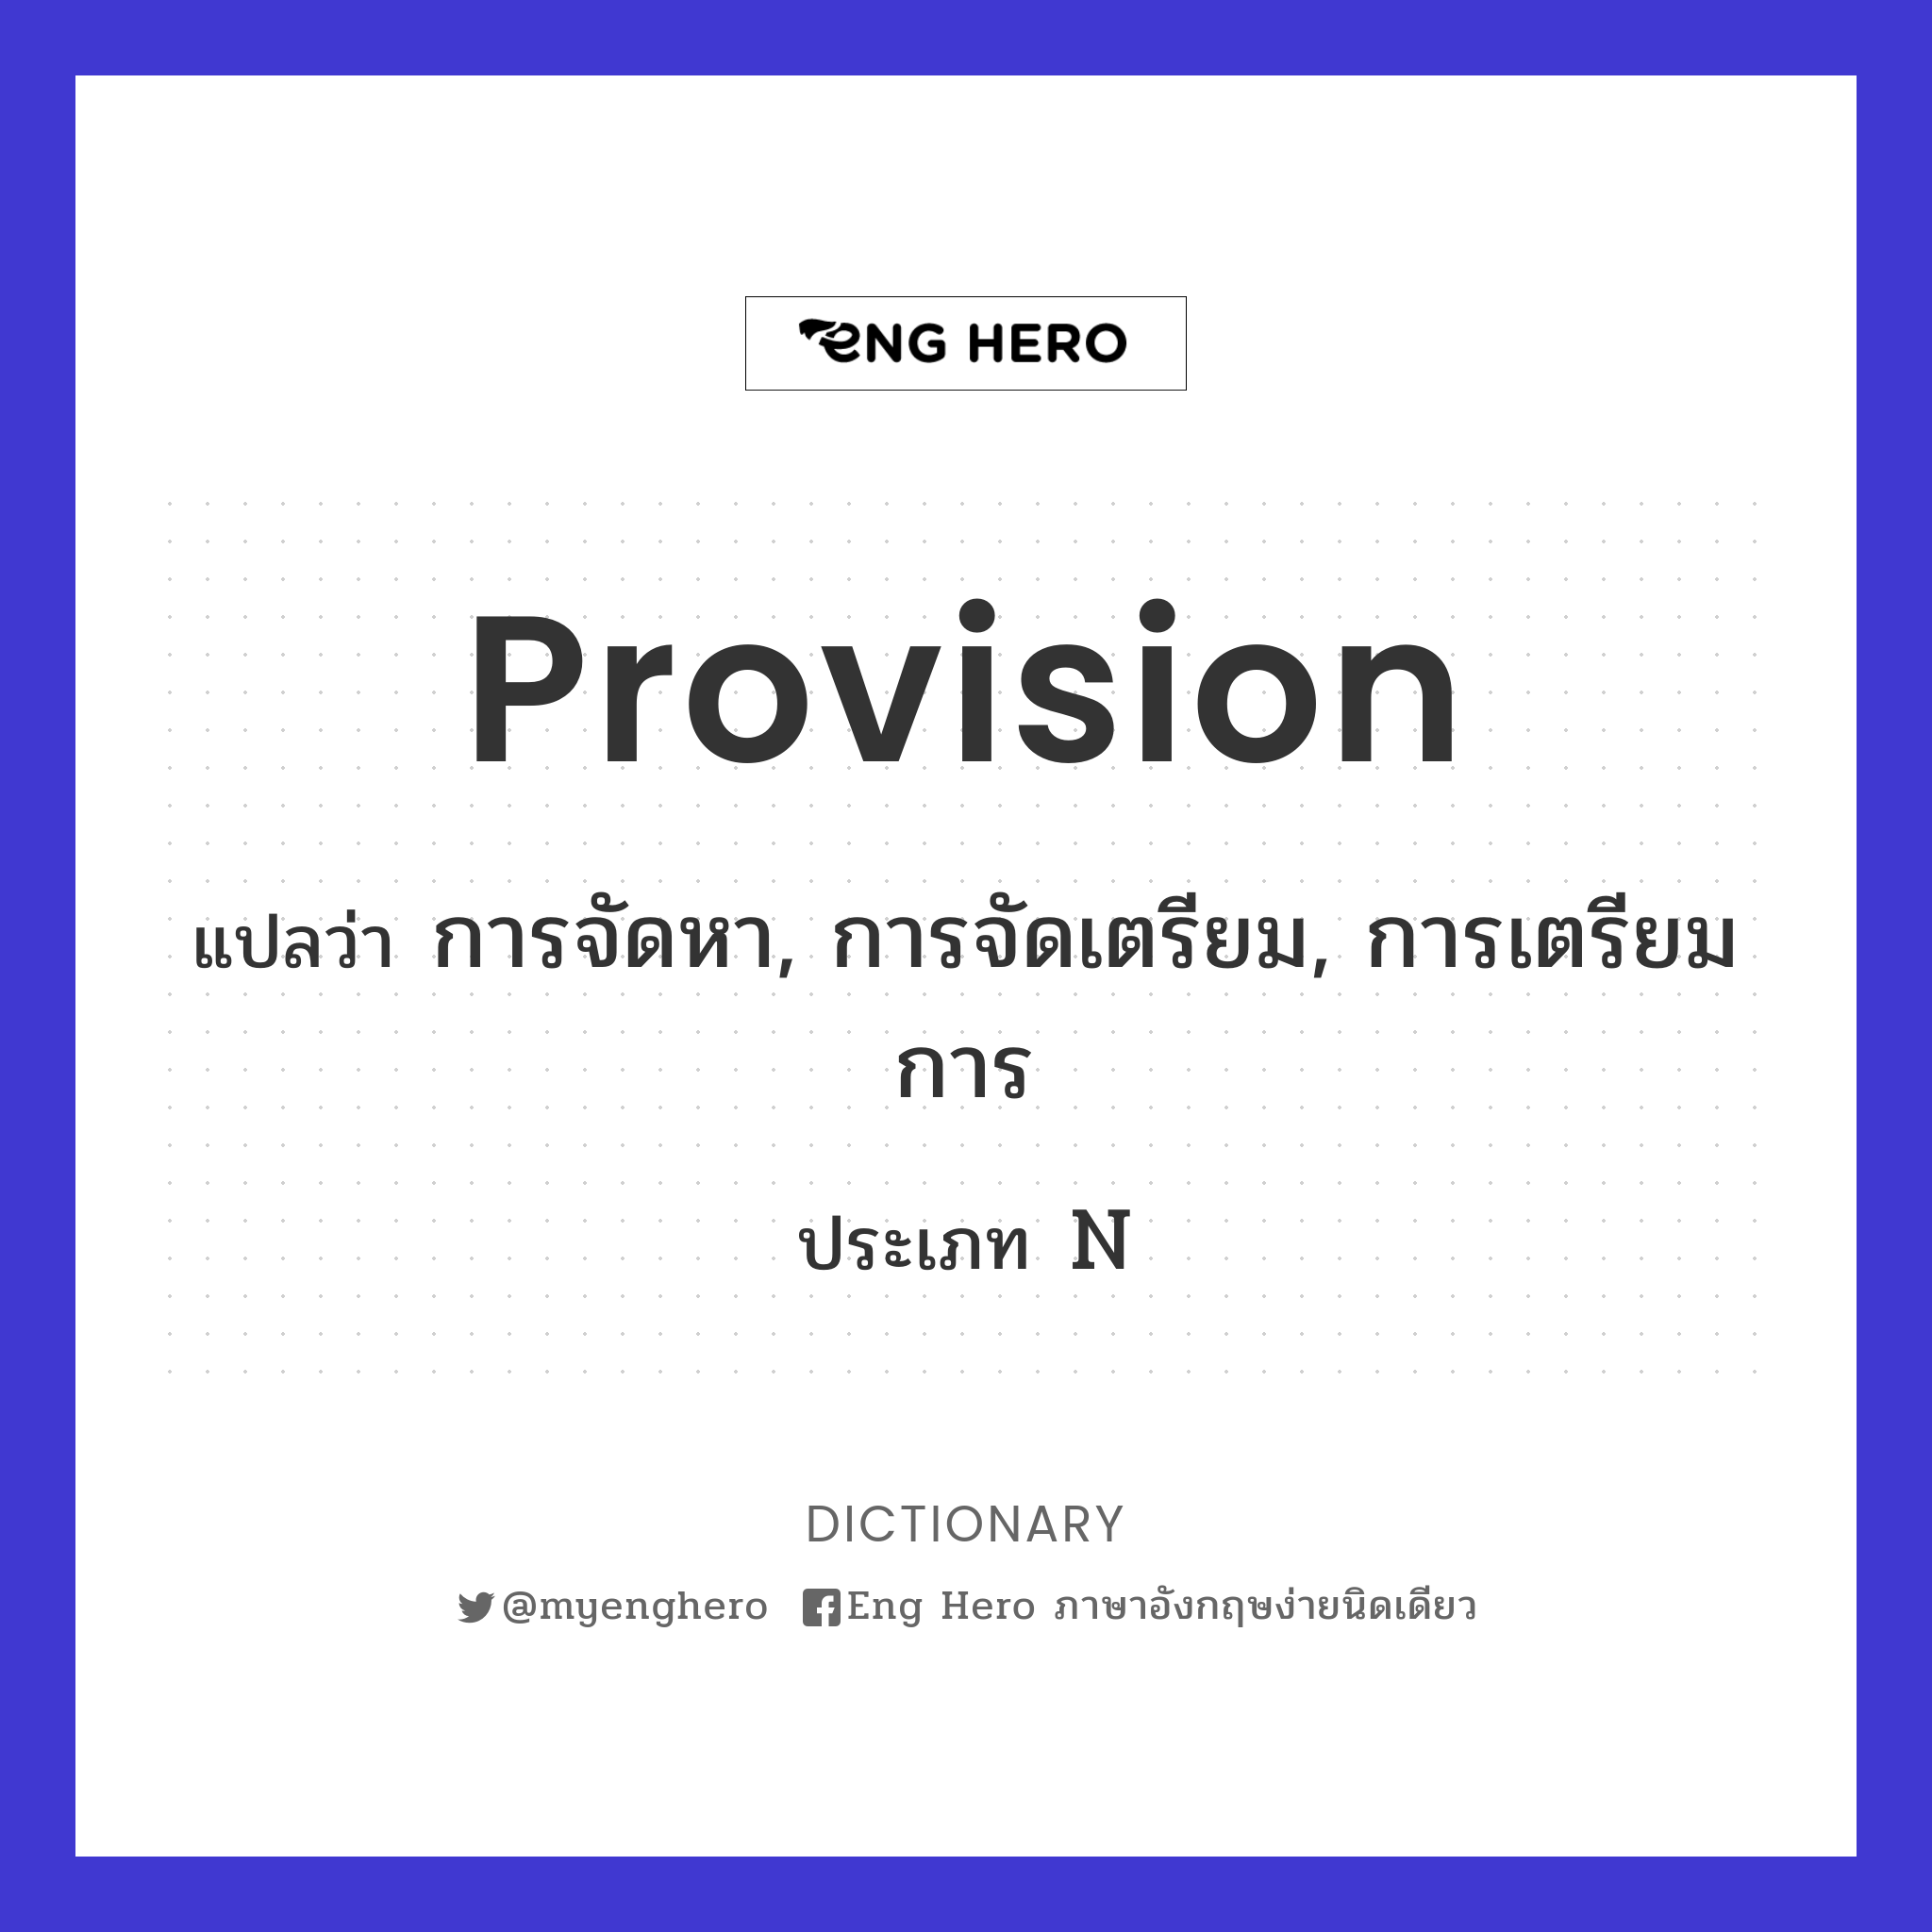 provision